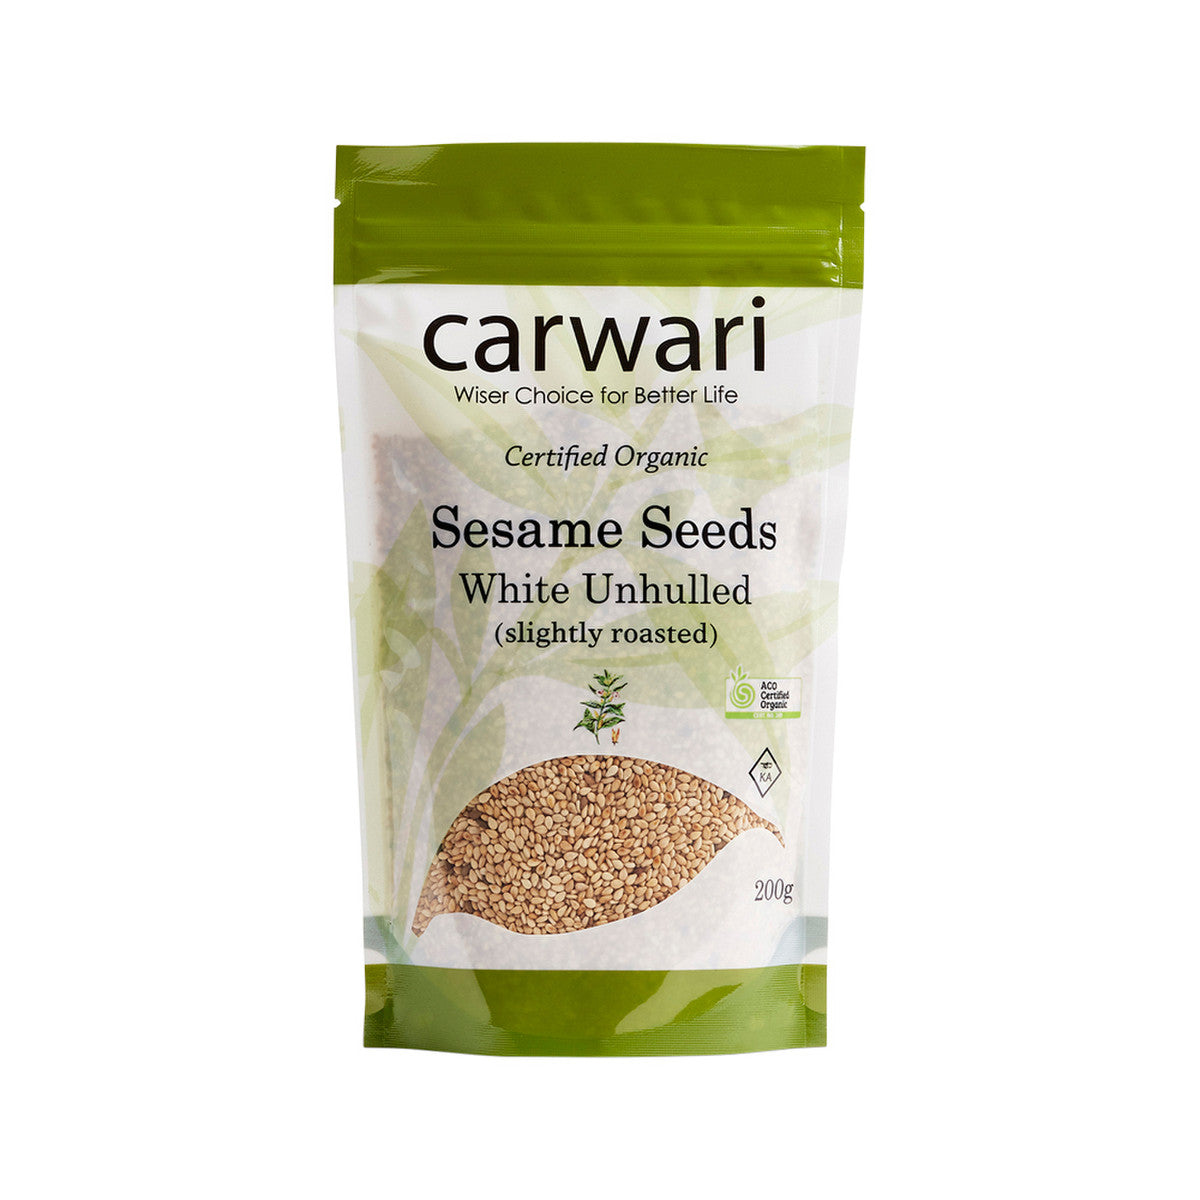 Carwari - Organic Sesame Seeds White Unhulled